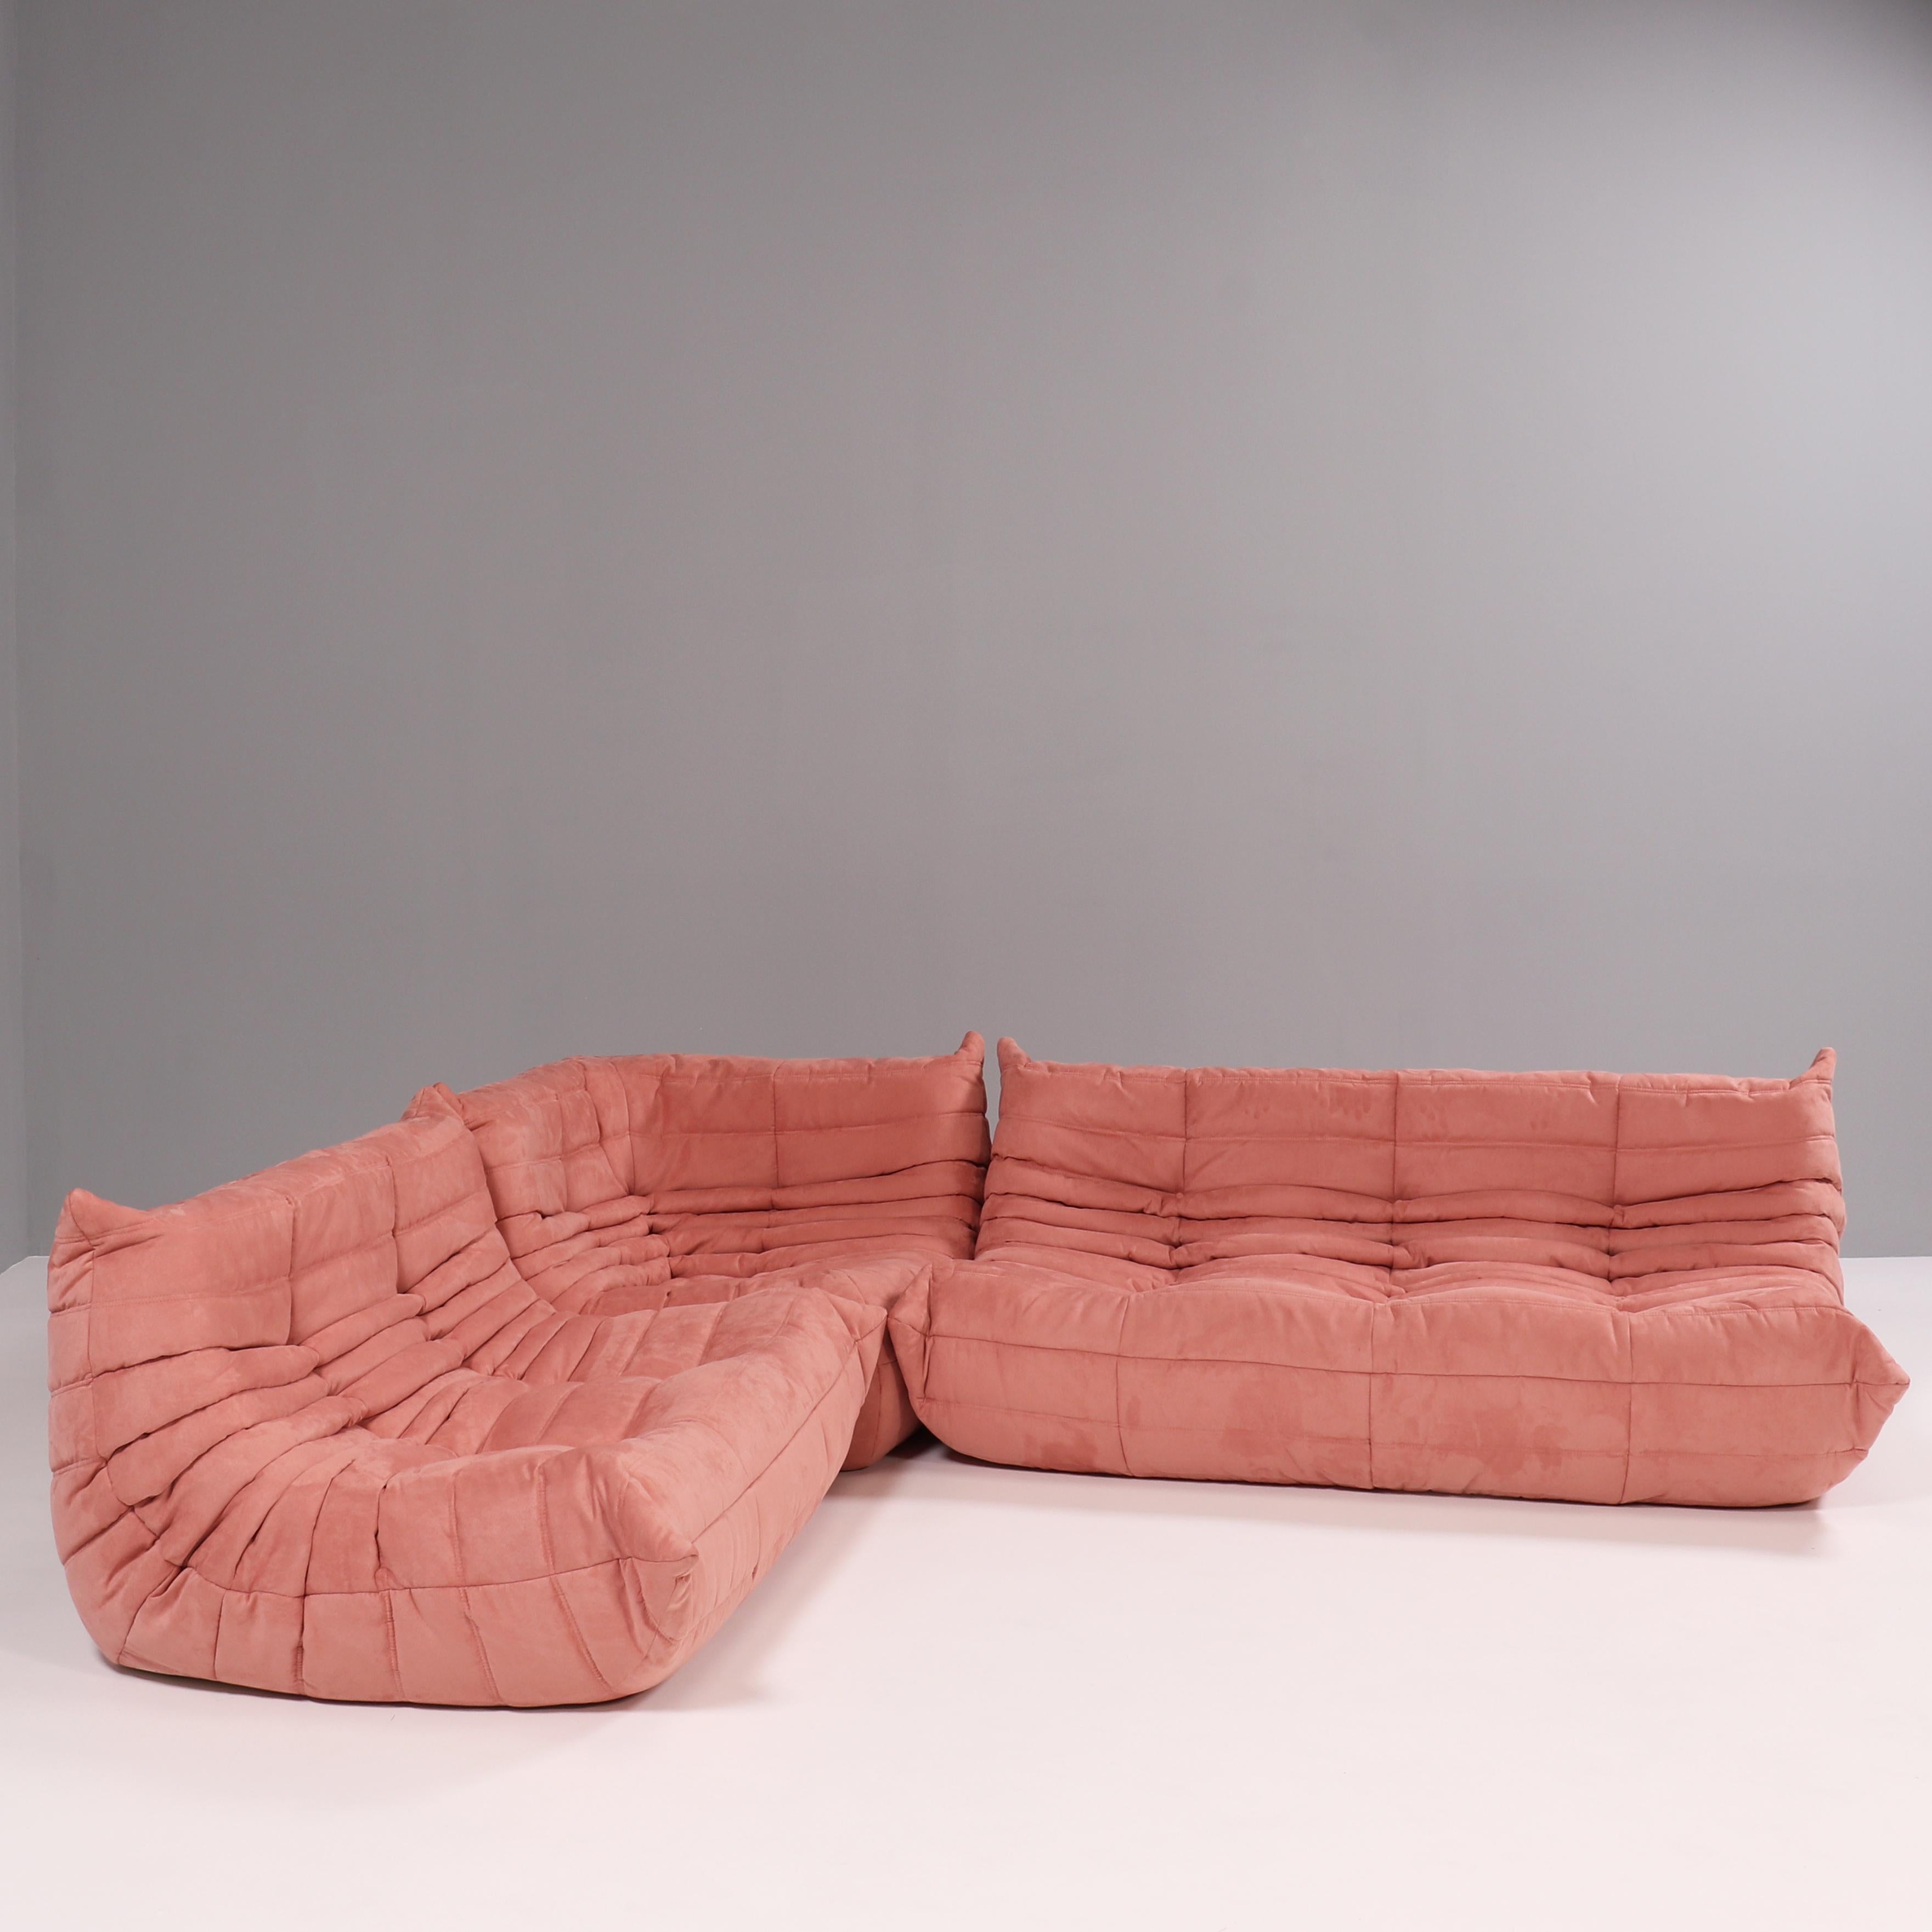 Ligne Roset by Michel Ducaroy Togo Pink Modular Sofa, Set of 8 1